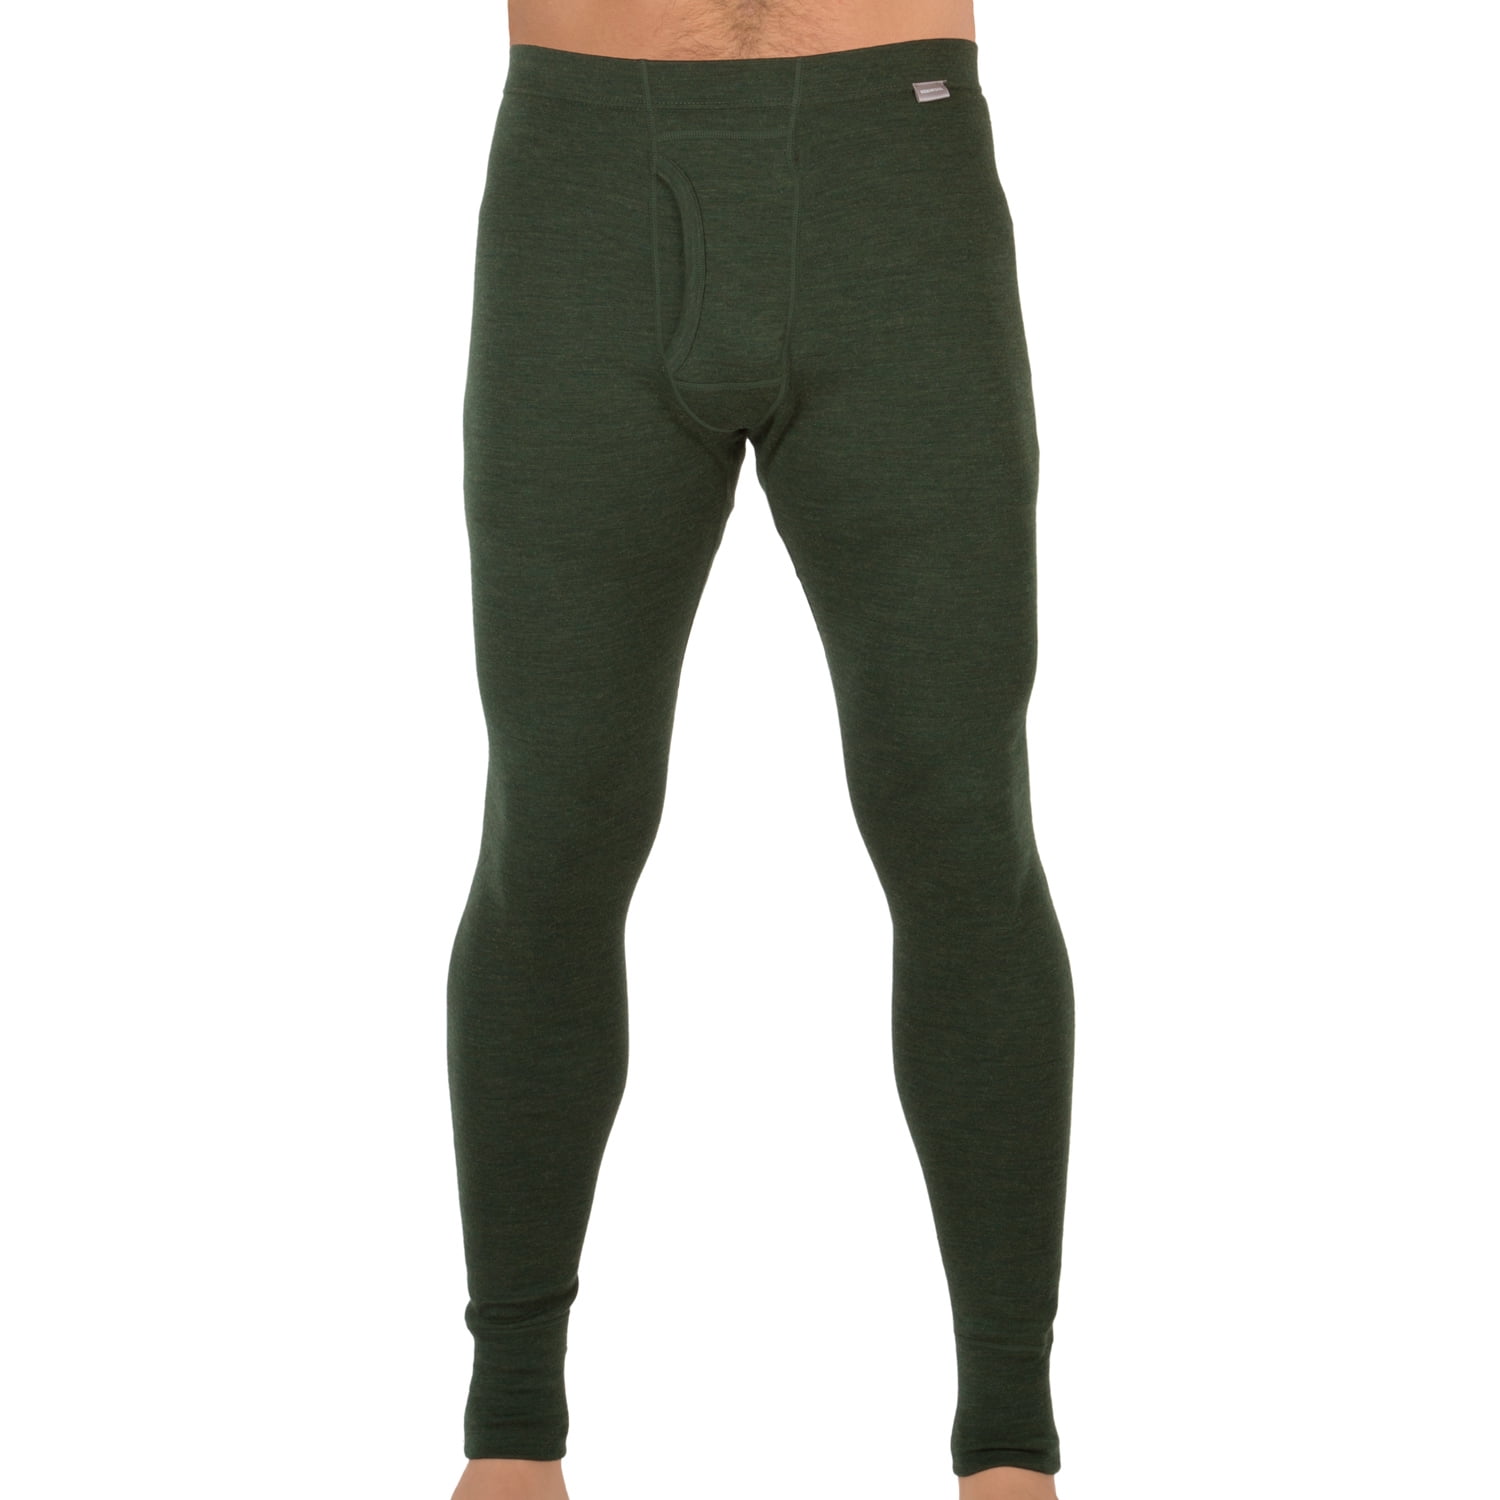 MERIWOOL Mens Base Layer 100% Merino Wool Thermal Pants - Walmart.com